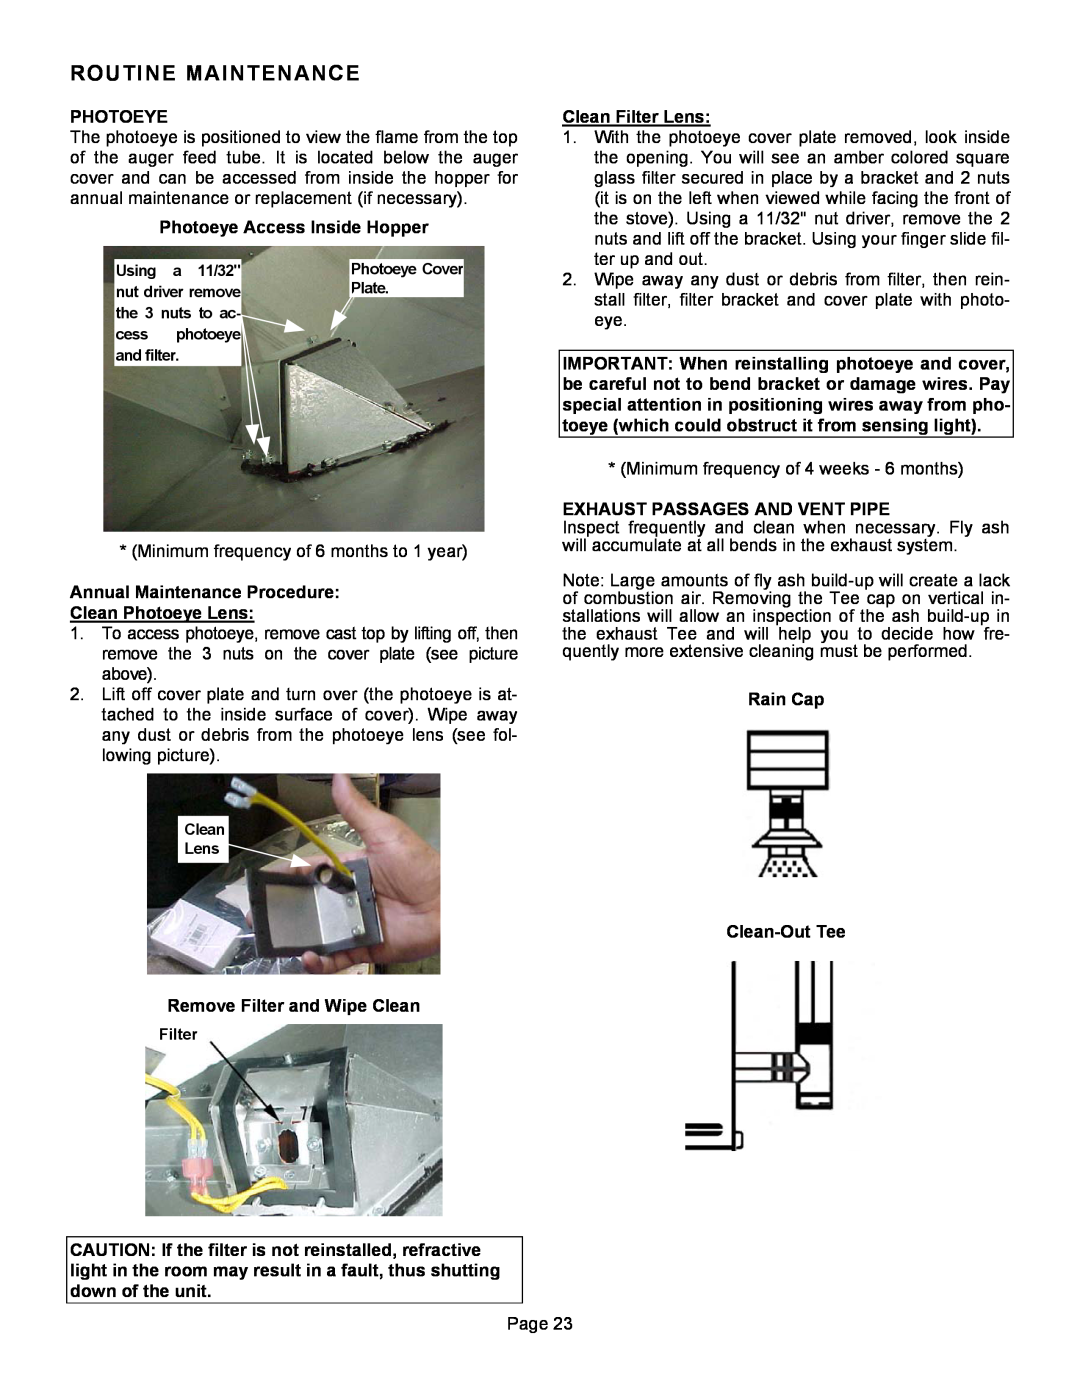 Lennox Hearth T300P operation manual Routine Maintenance, Photoeye Access Inside Hopper, Clean Filter Lens, Rain Cap 